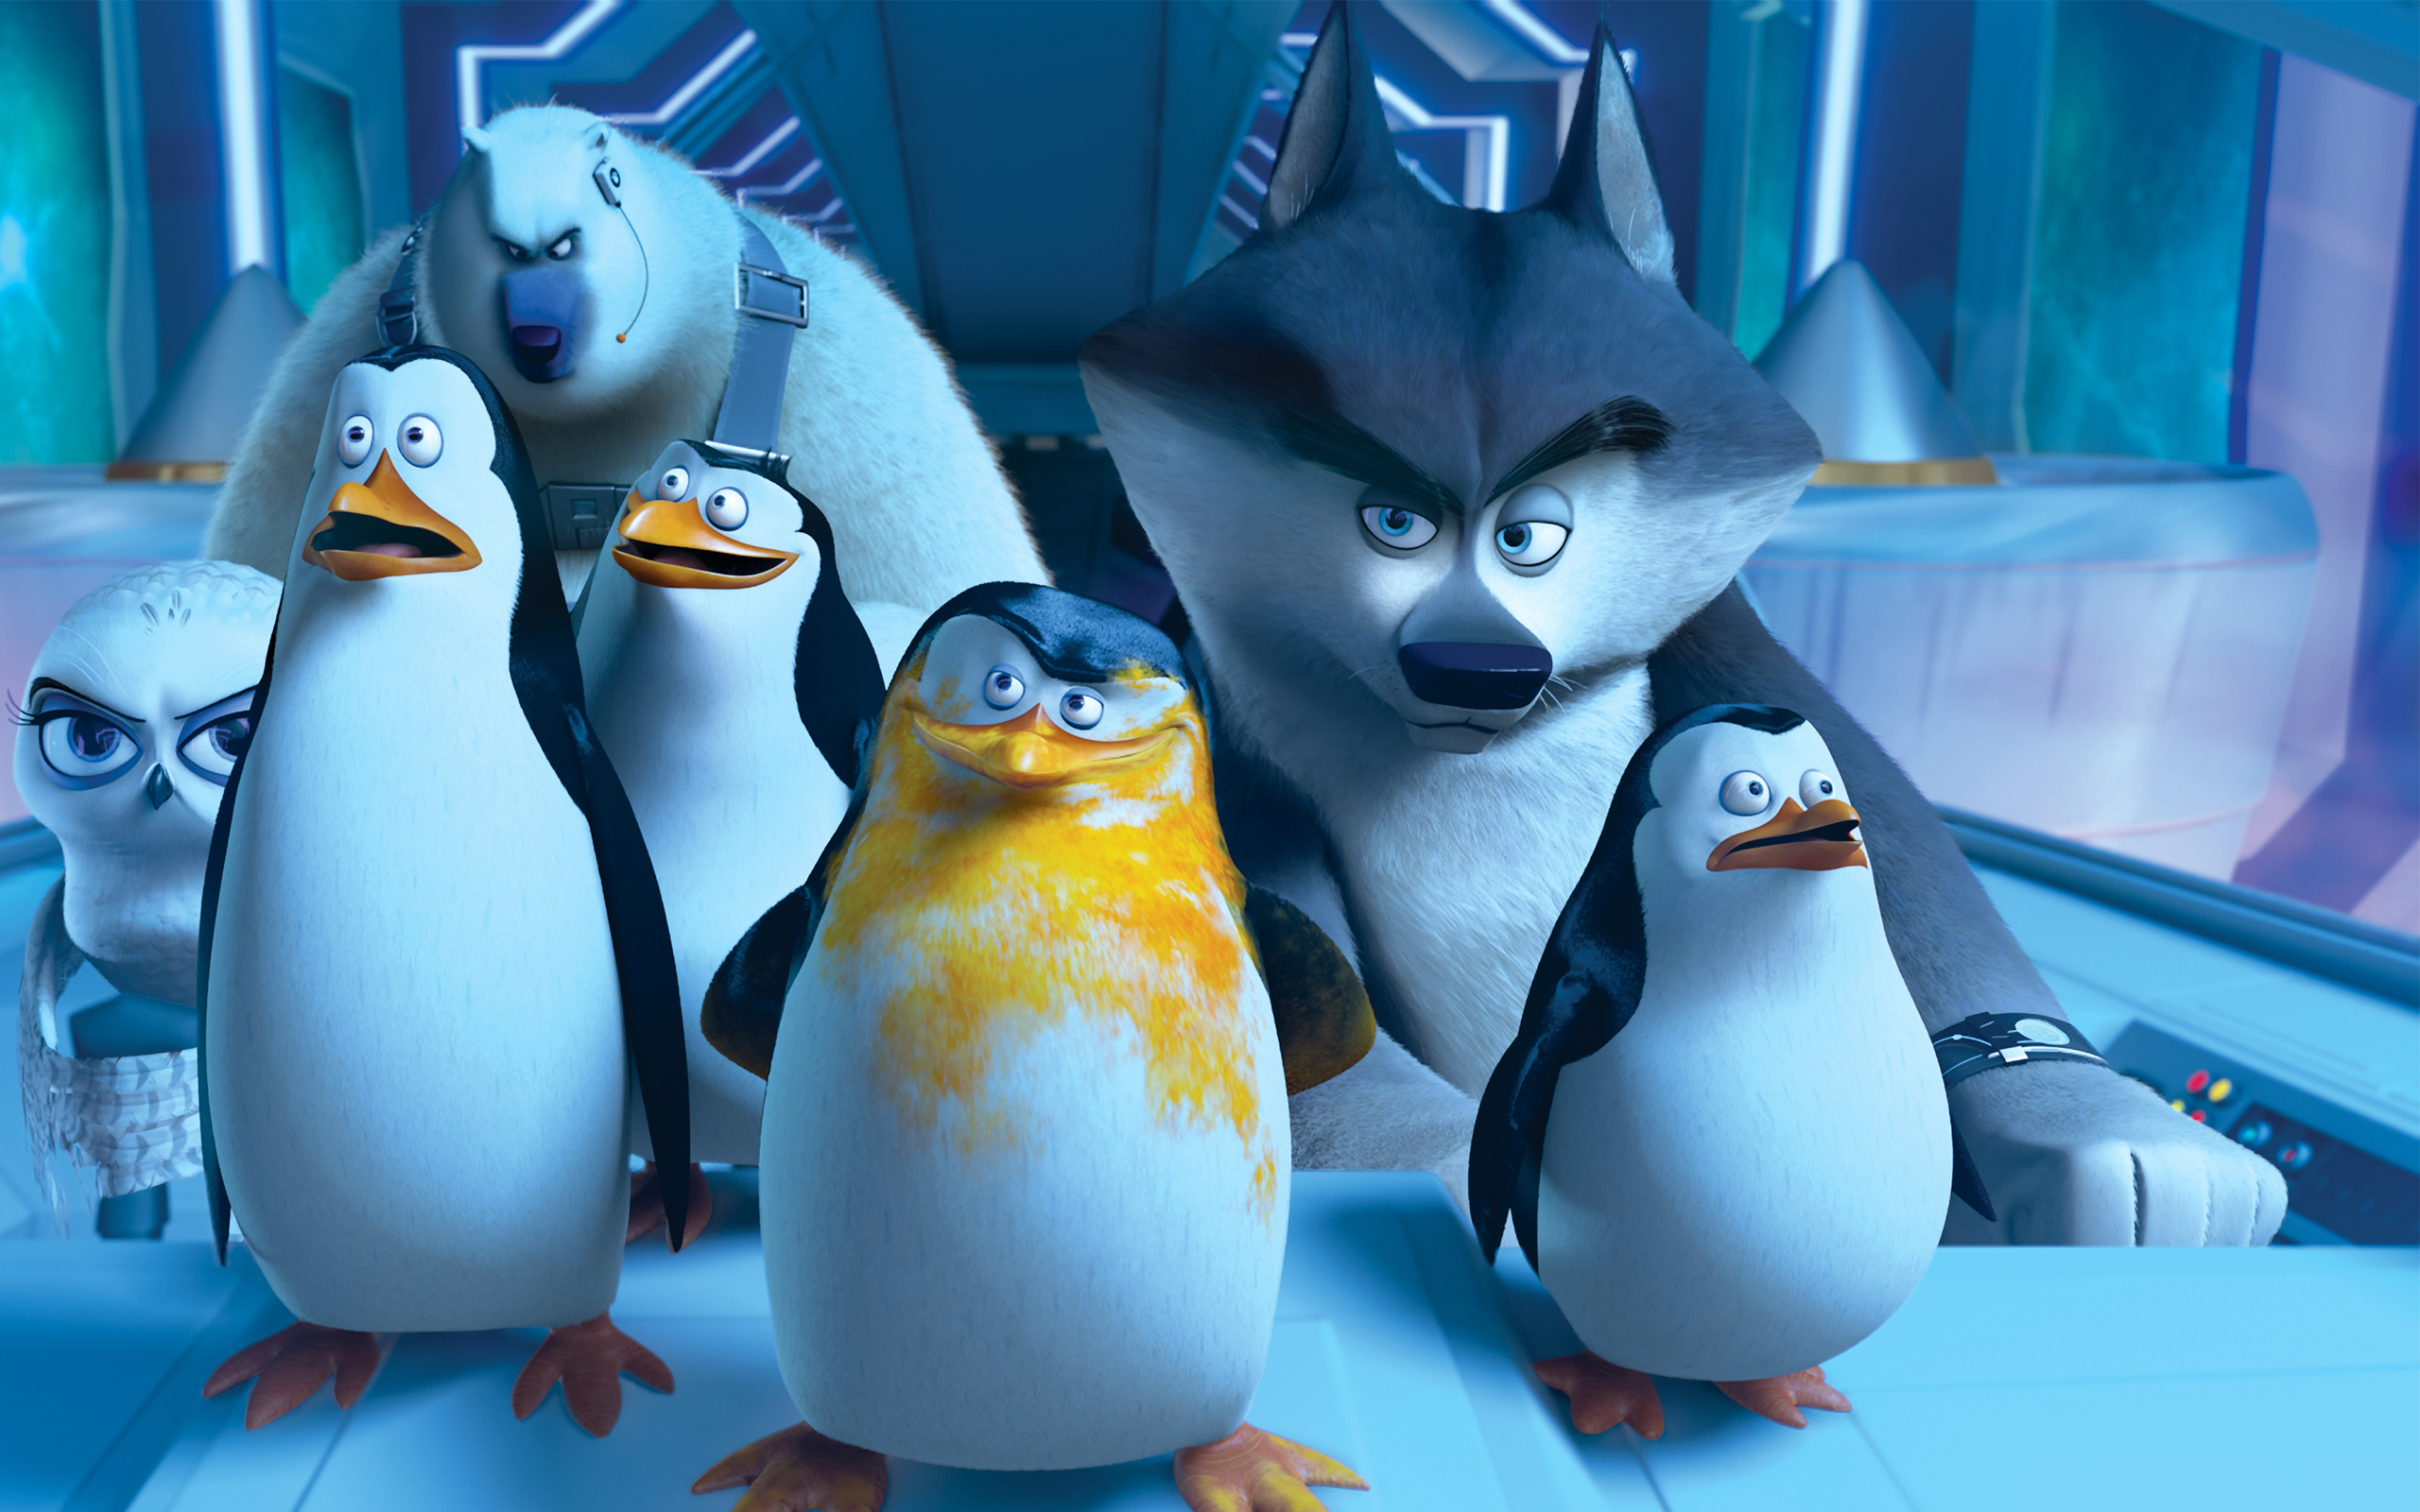 penguins of madagascar, movie images